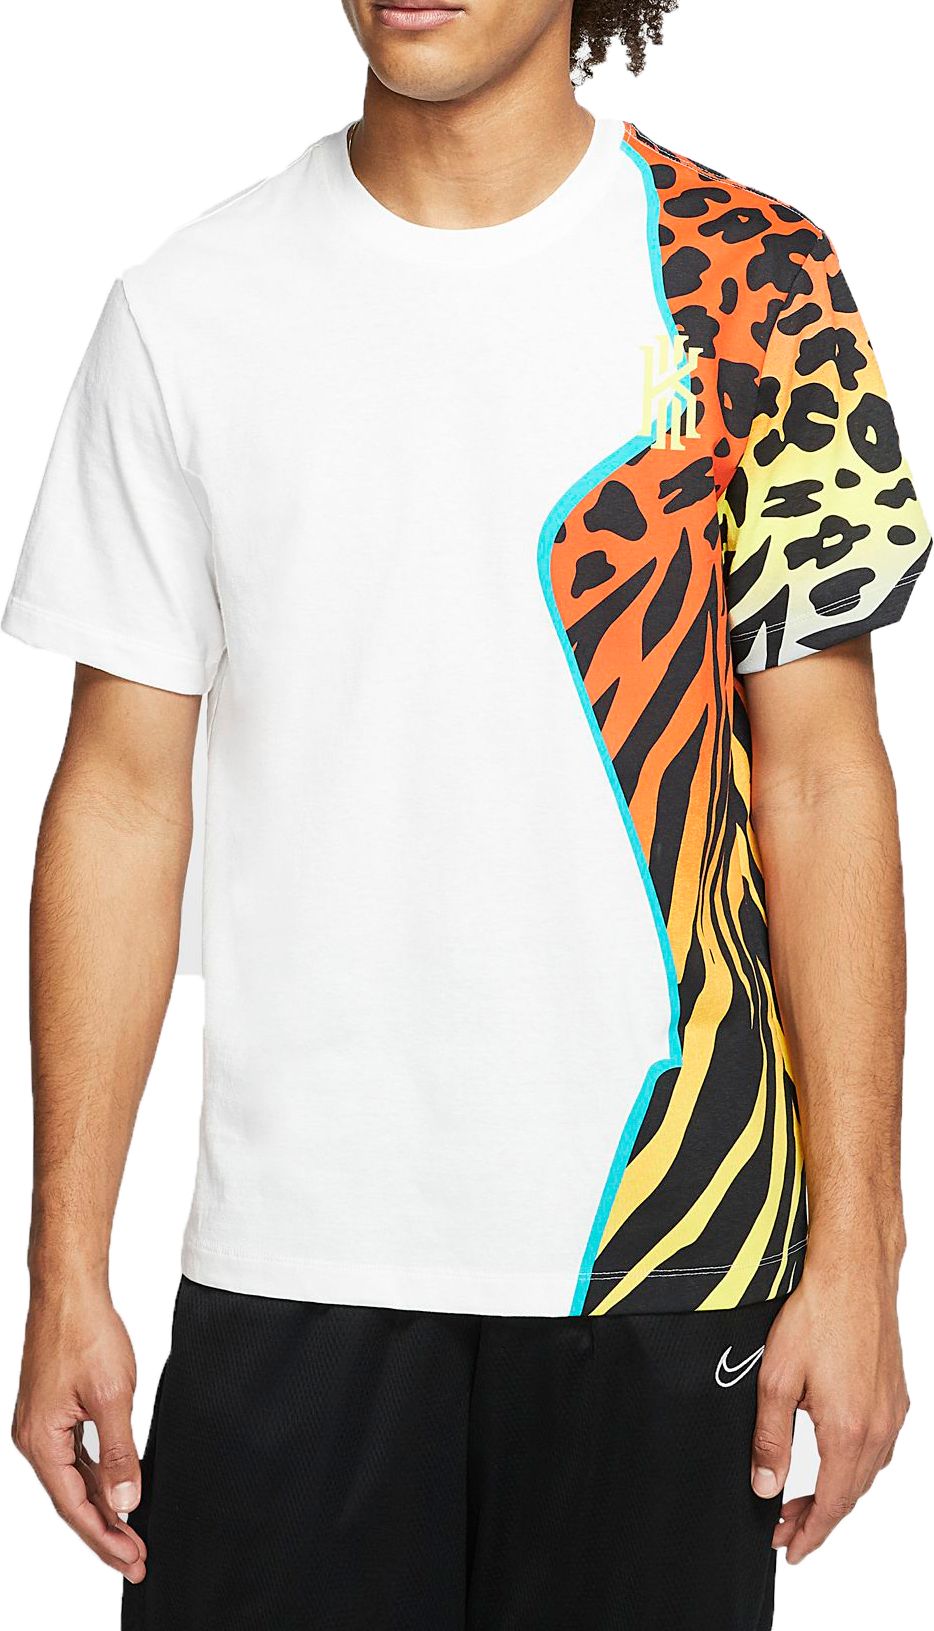 nike tiger print shirt